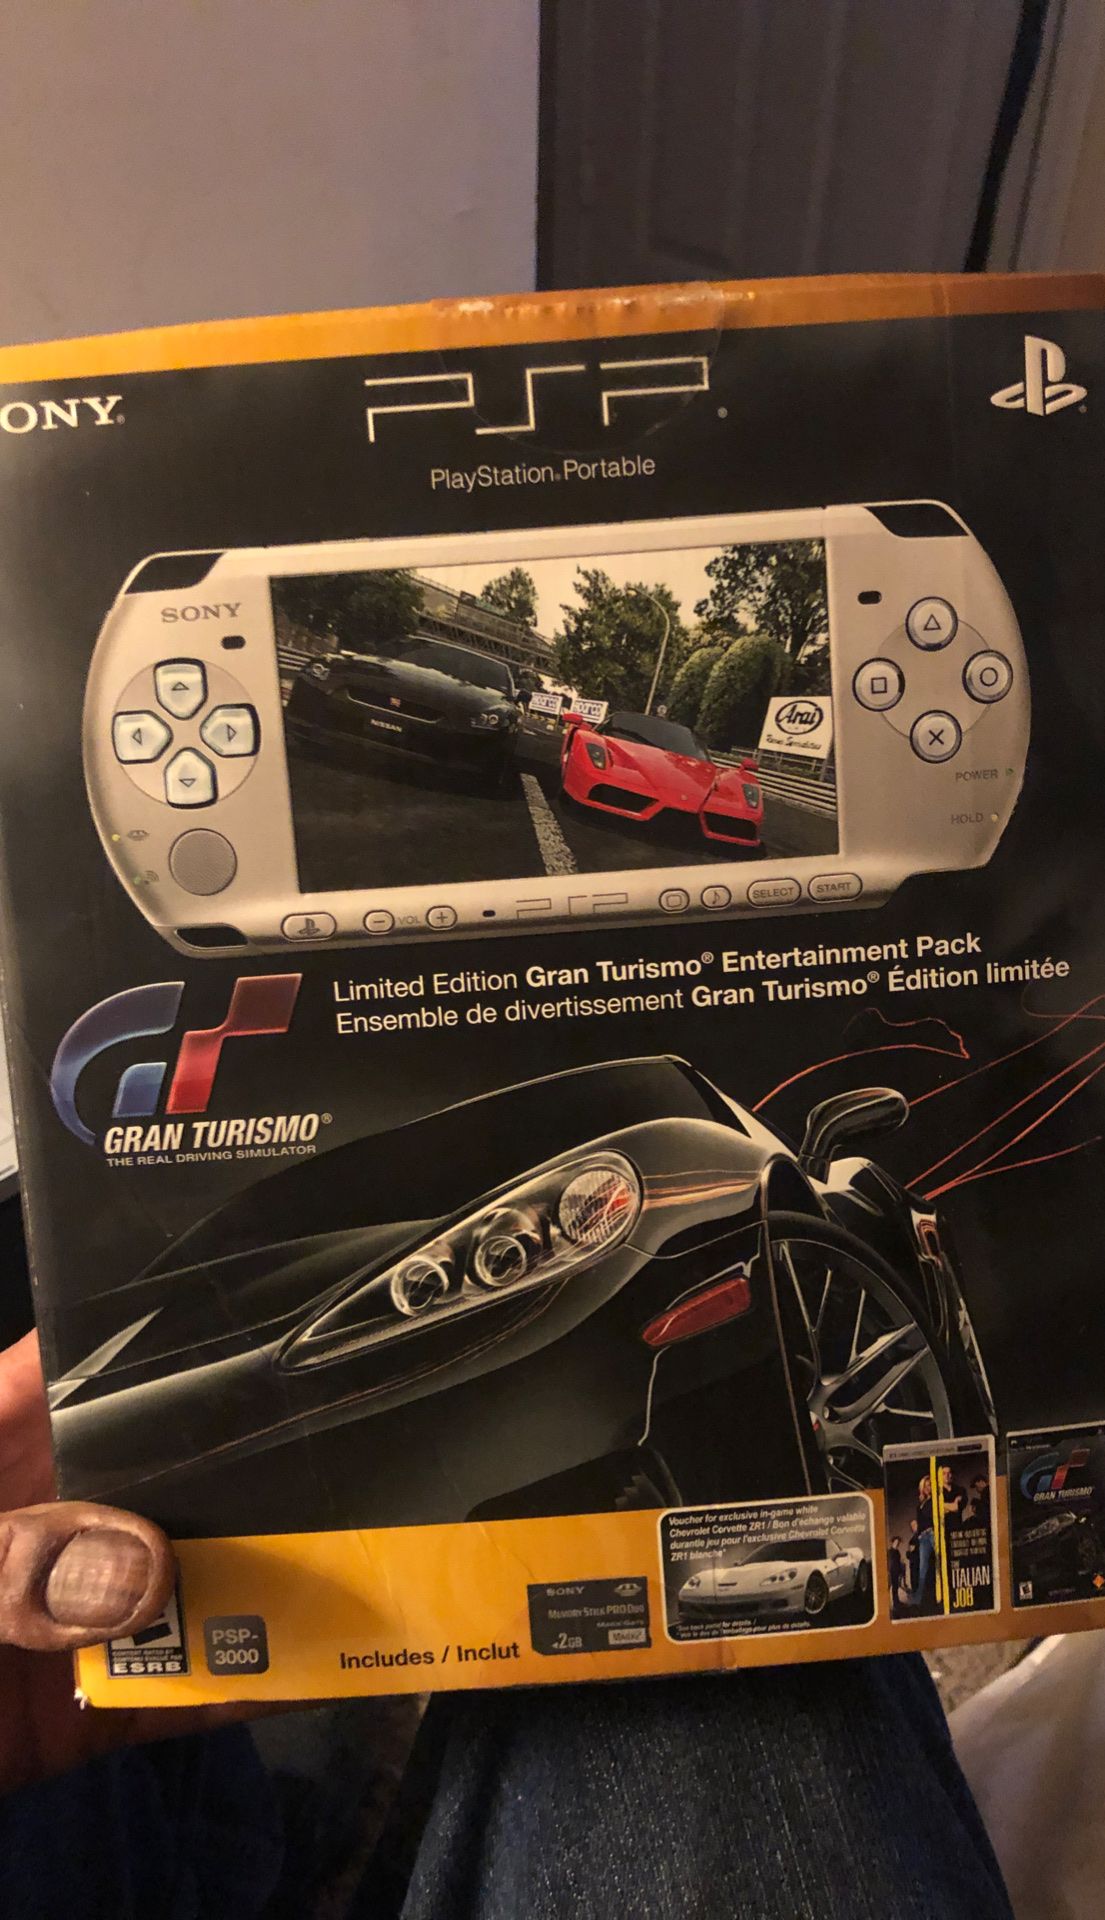 Sony PSP 3000 NFS bundle New in box